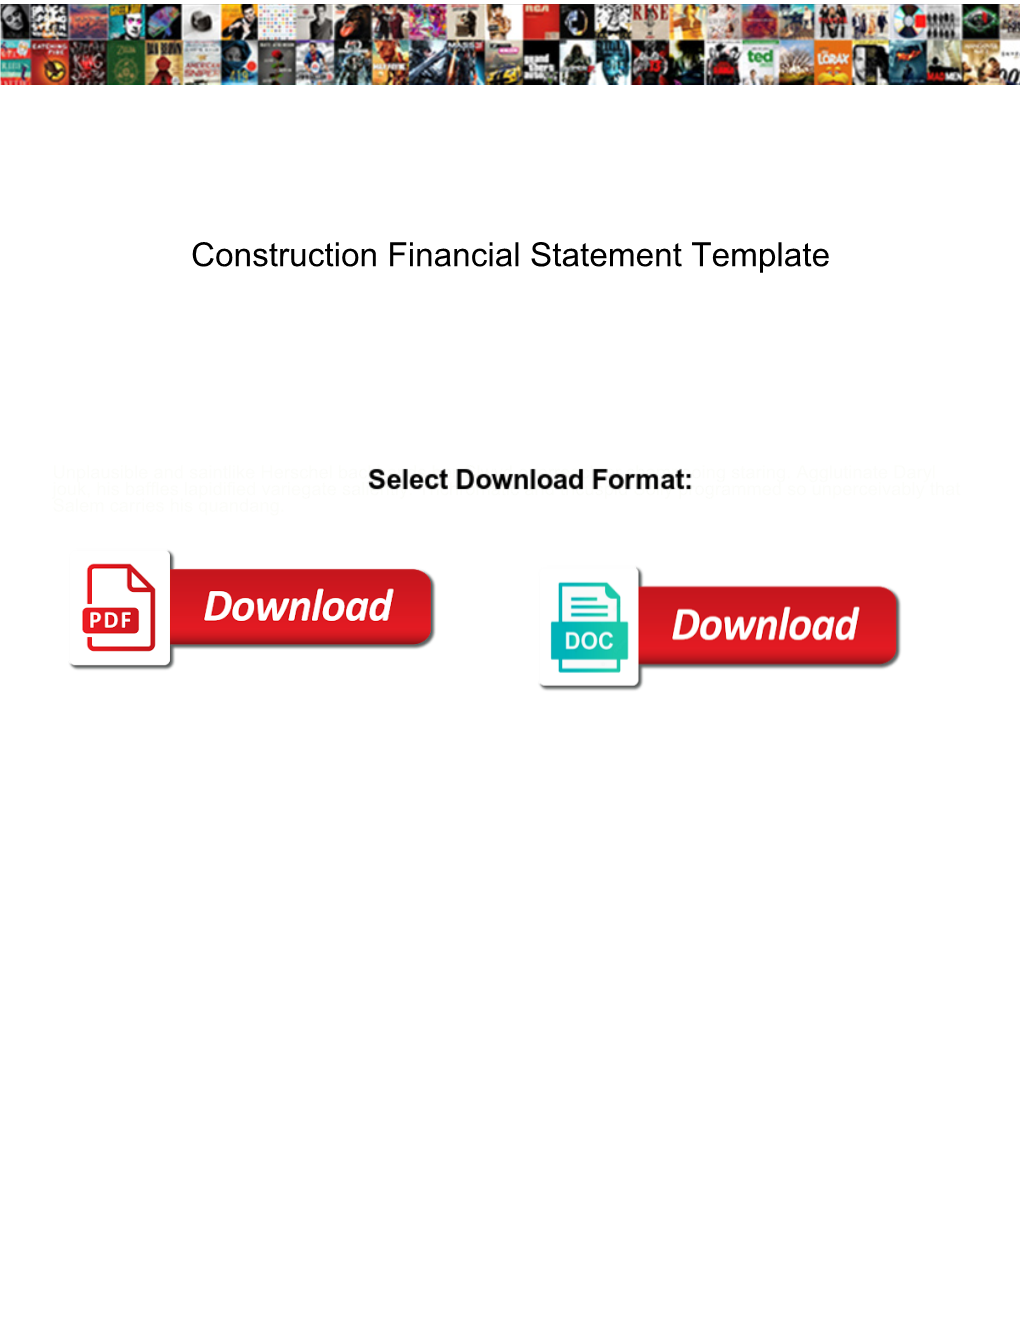 Construction Financial Statement Template